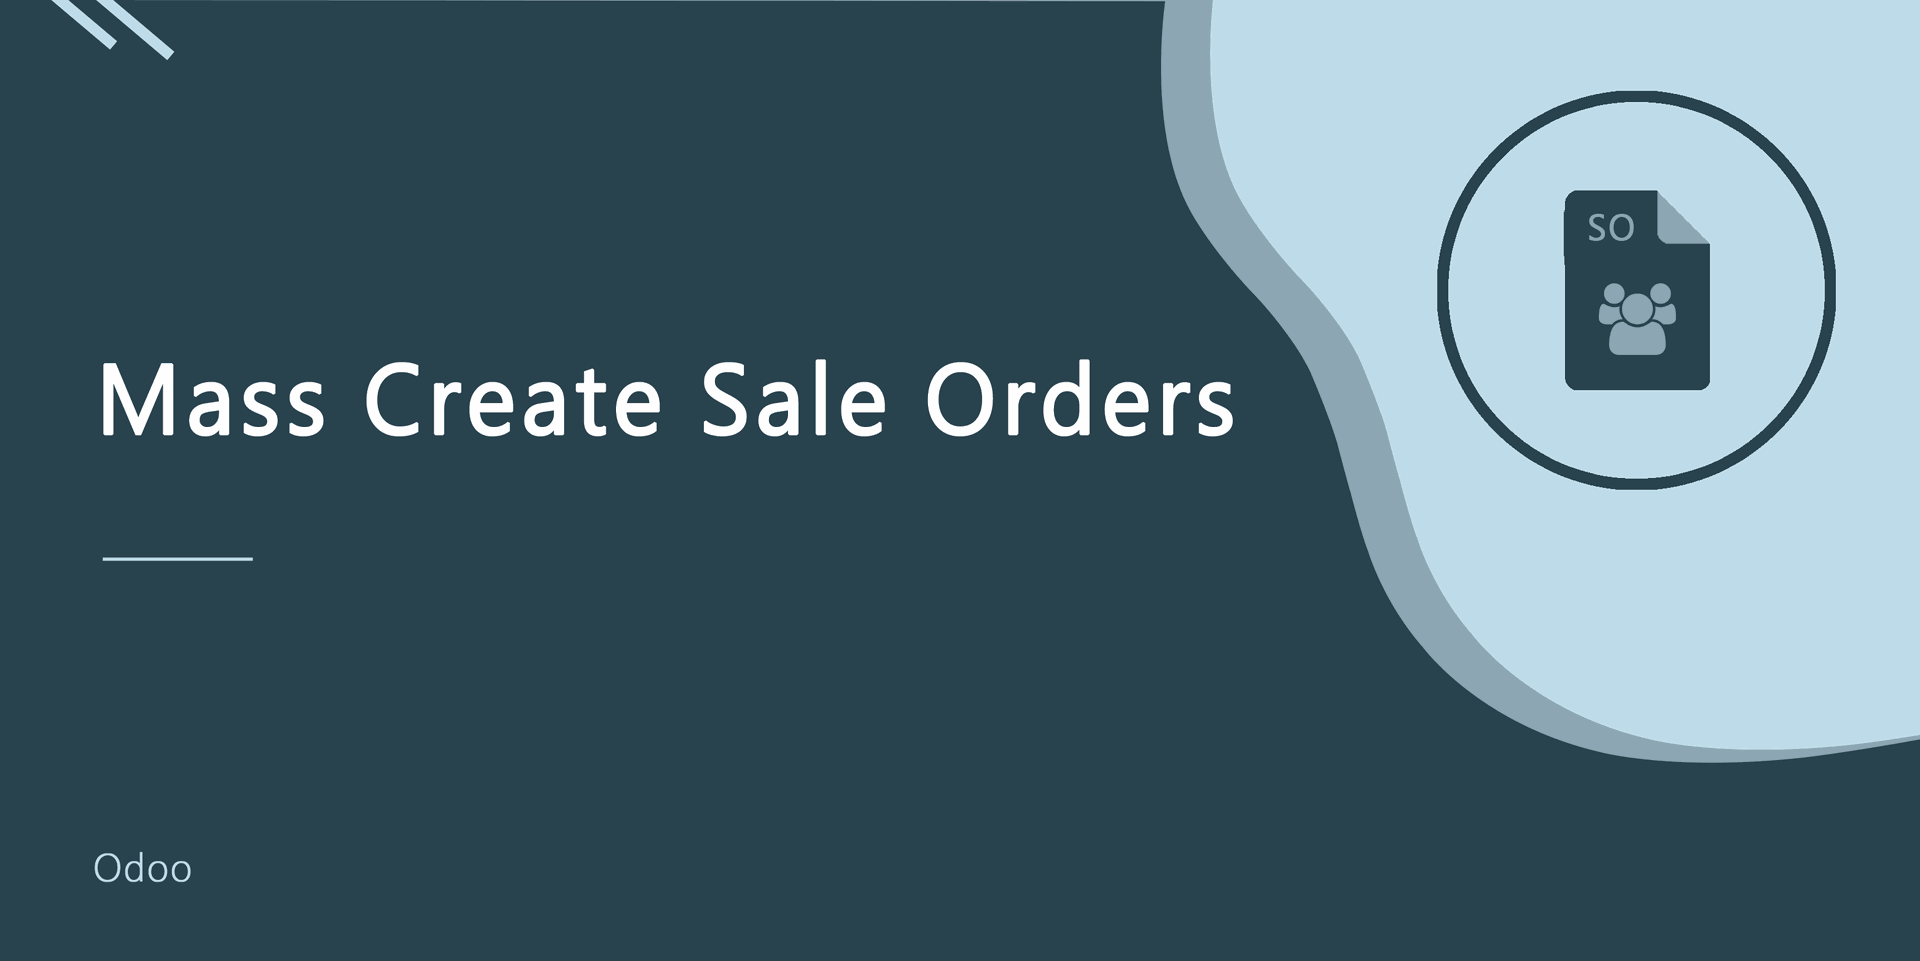 Mass Create Sale Orders
